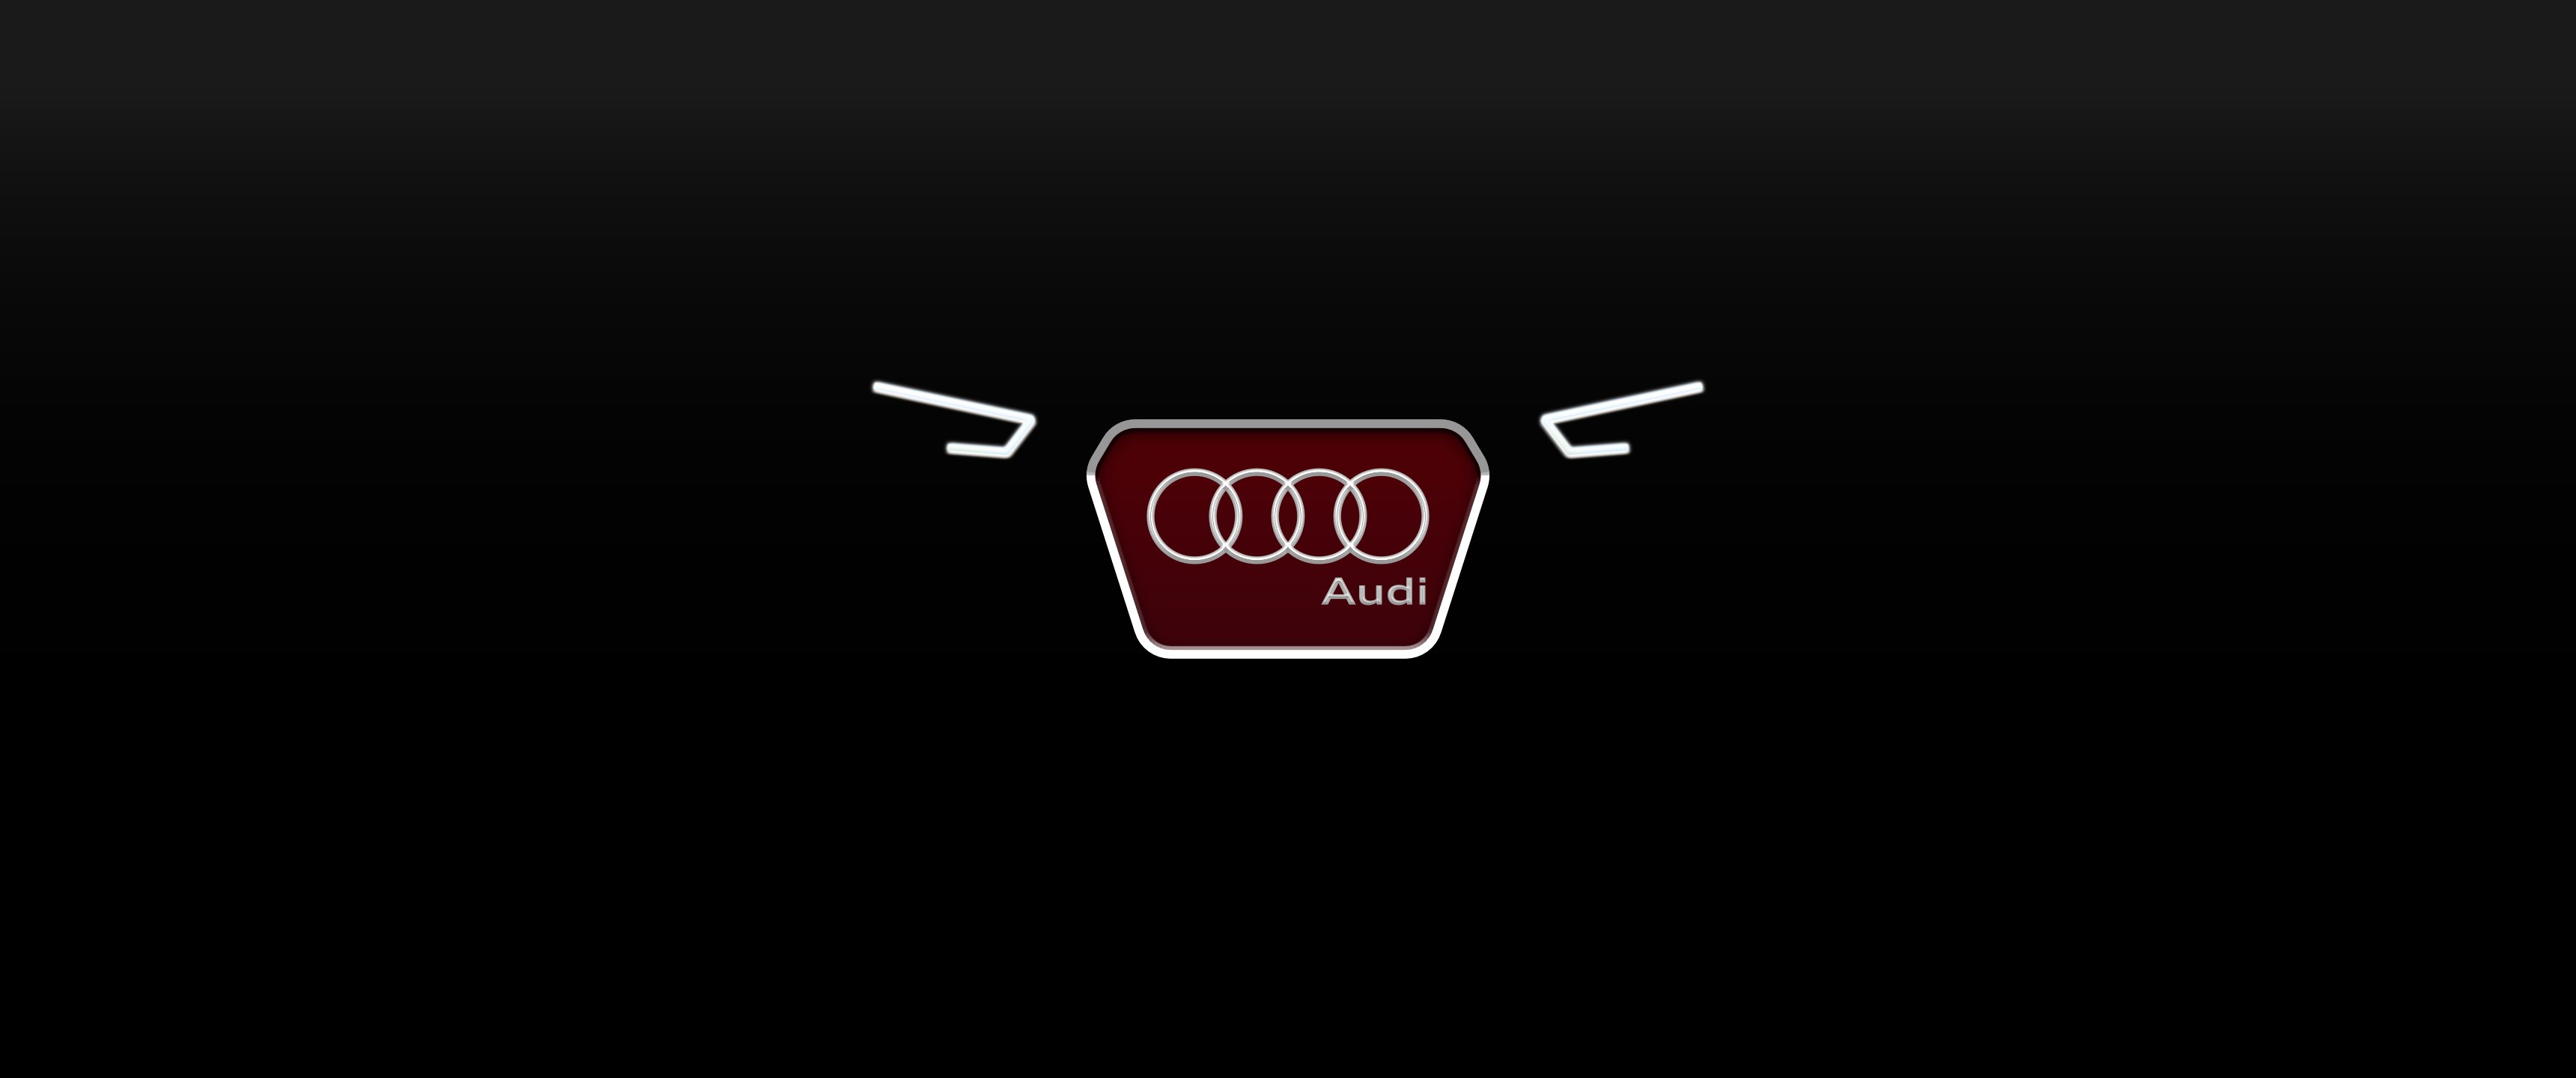 Hd Wallpaper Audi Logo - HD Wallpaper 